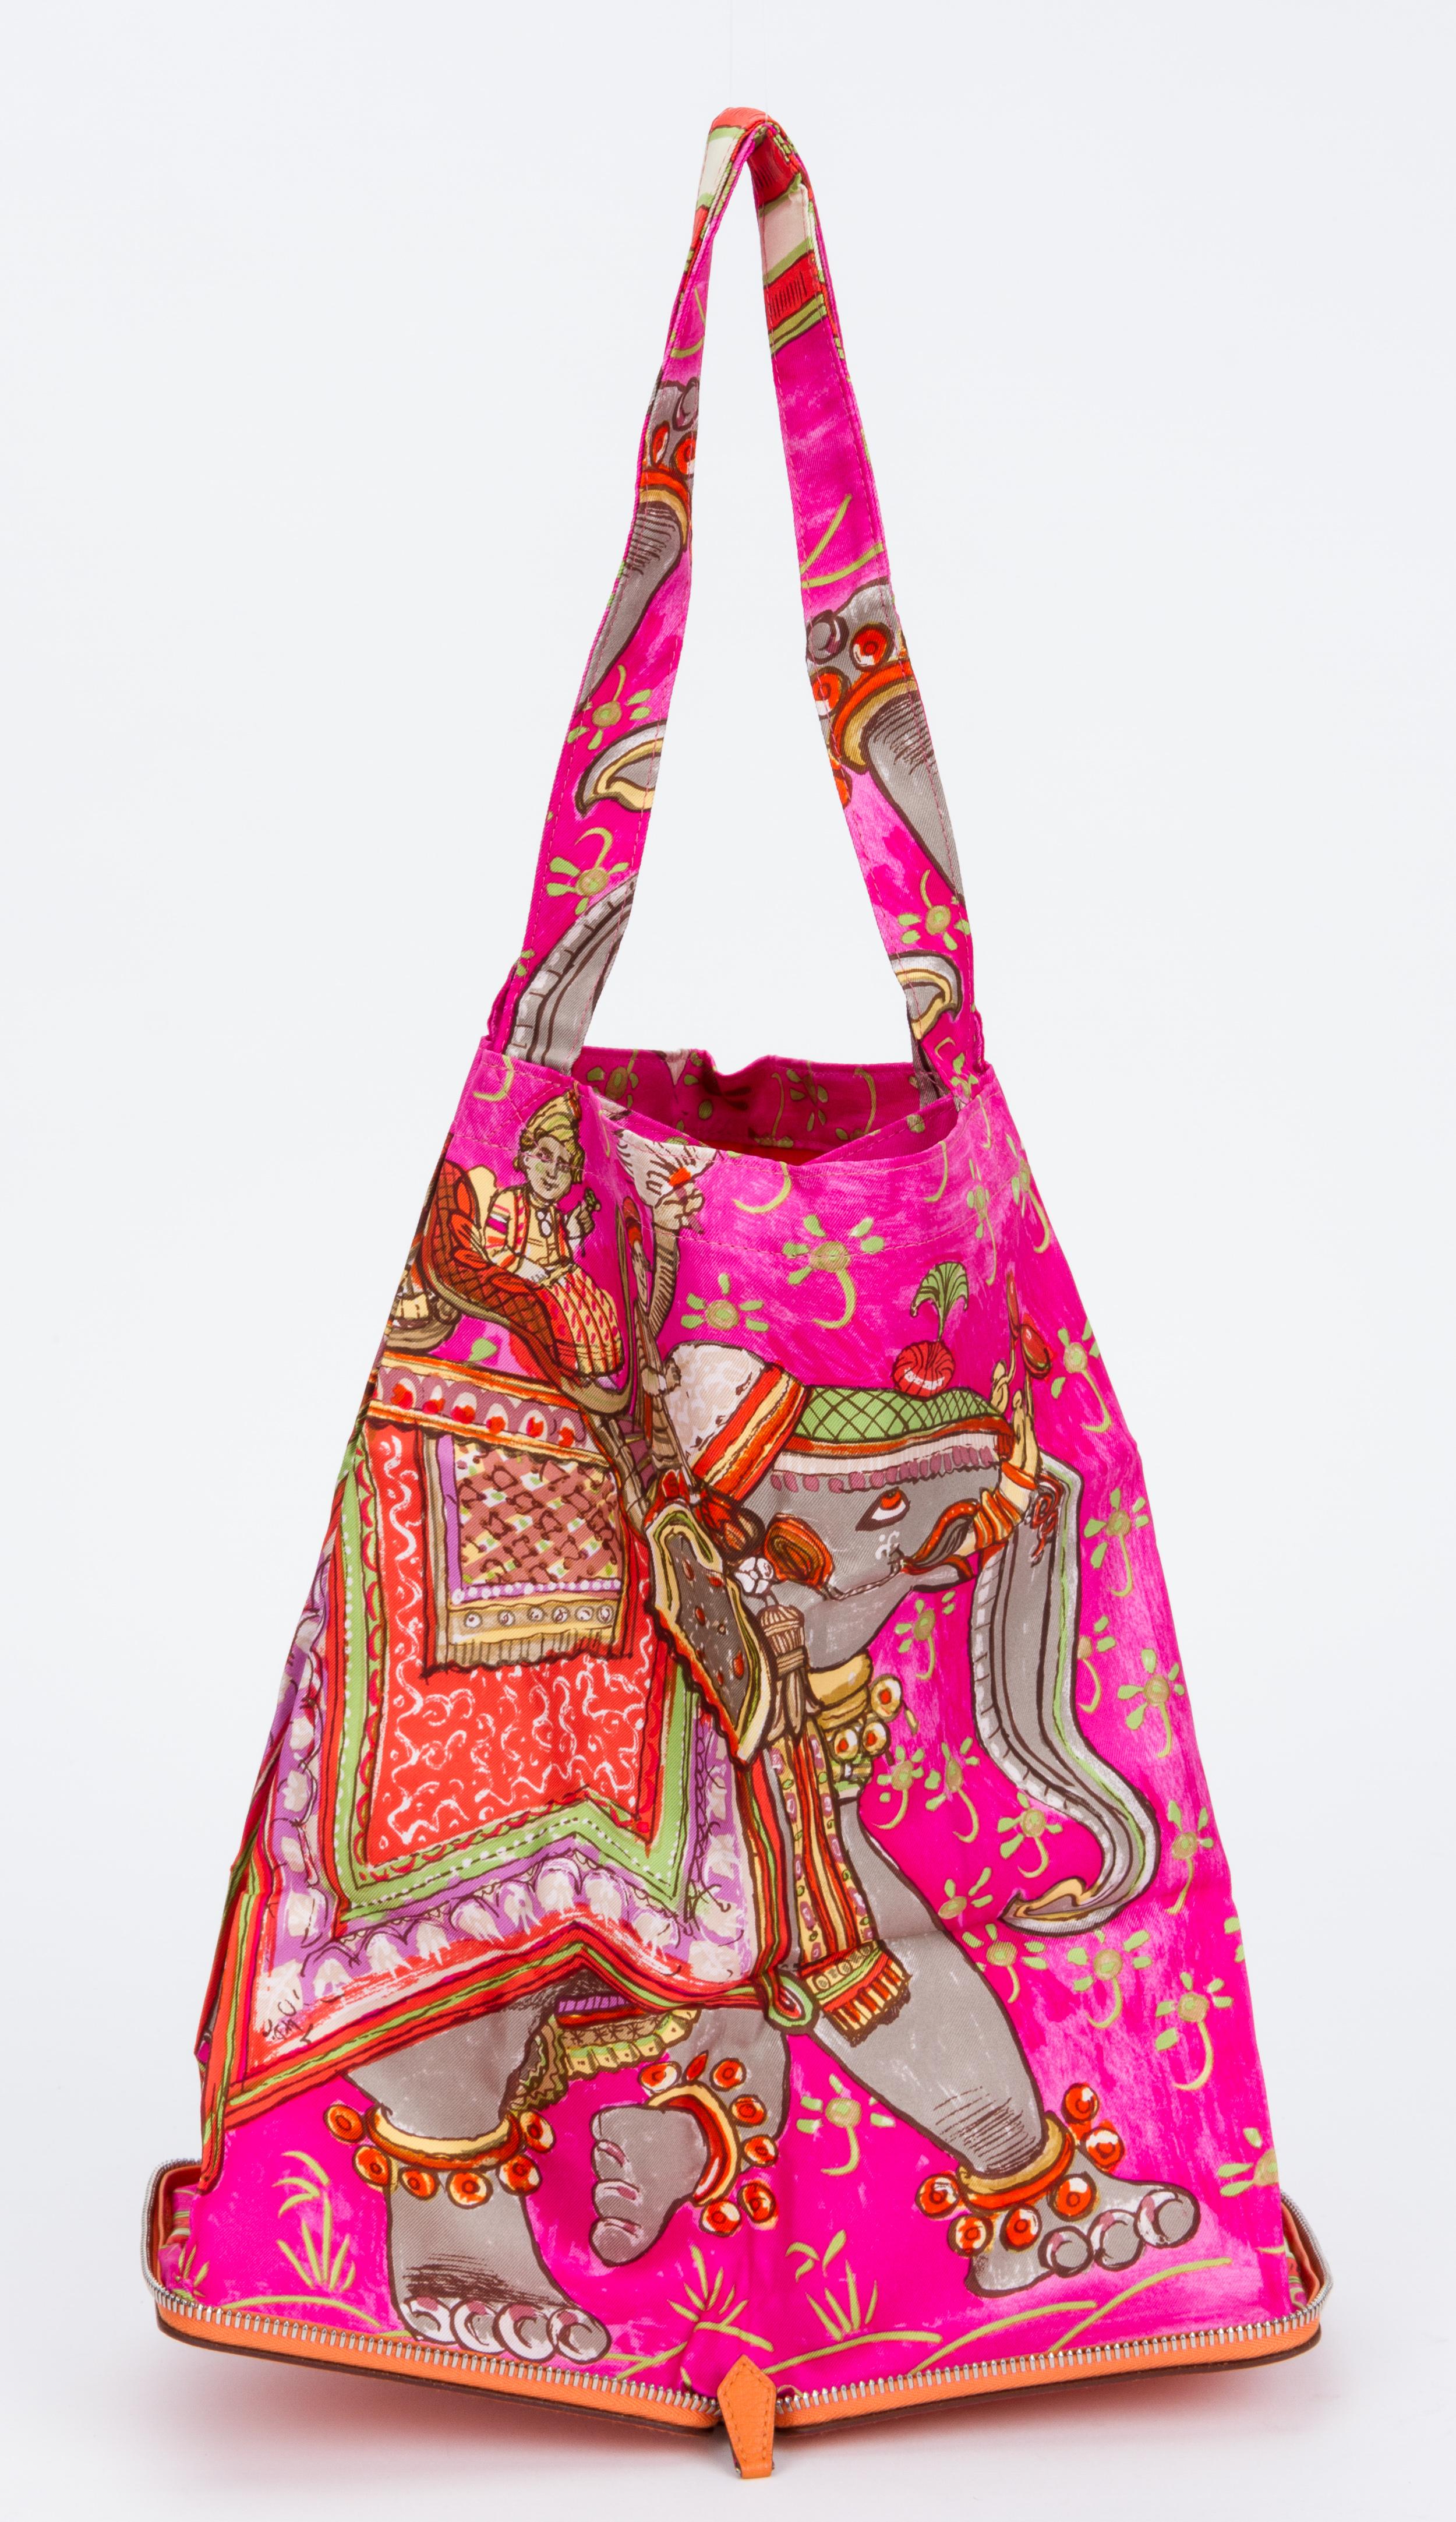 Hermès orange Chevre leather eco silky pop tote bag in hot pink Indian pattern. Stamped: Paris - Made in France. Drop: 9